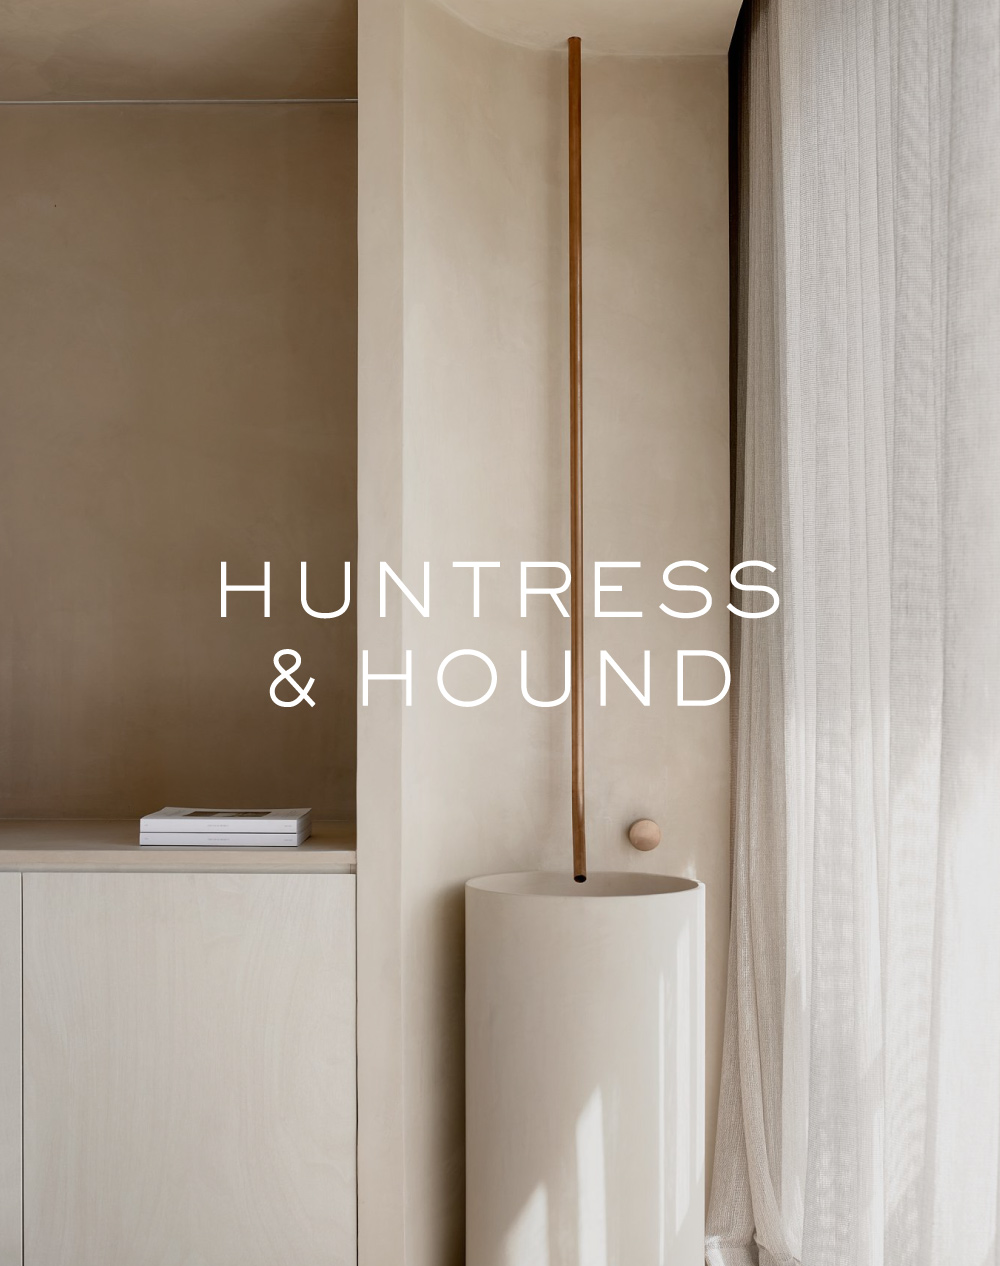 Huntress and Hound logo overlaid over a photo of their studio